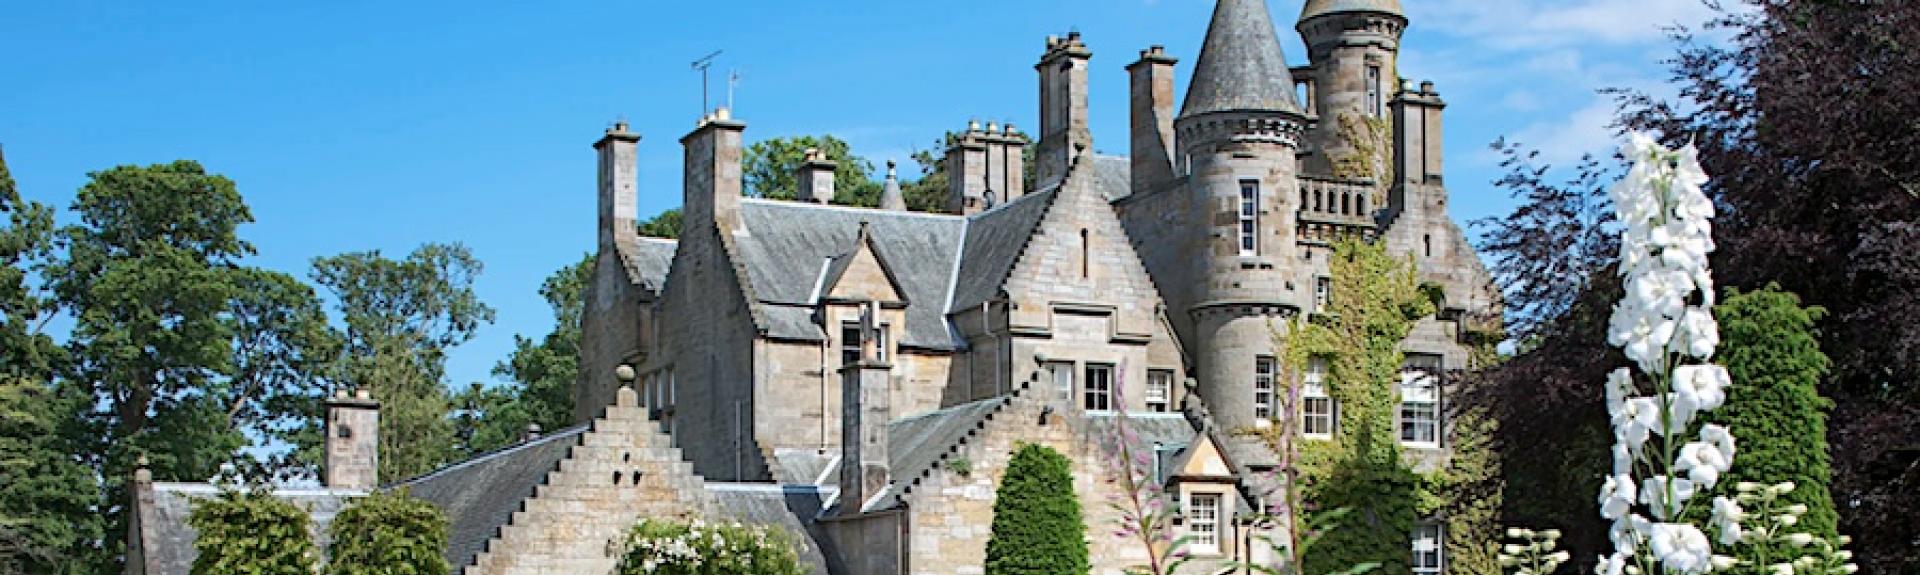 A multi-turreted Scottish castle in landscaped gardens.